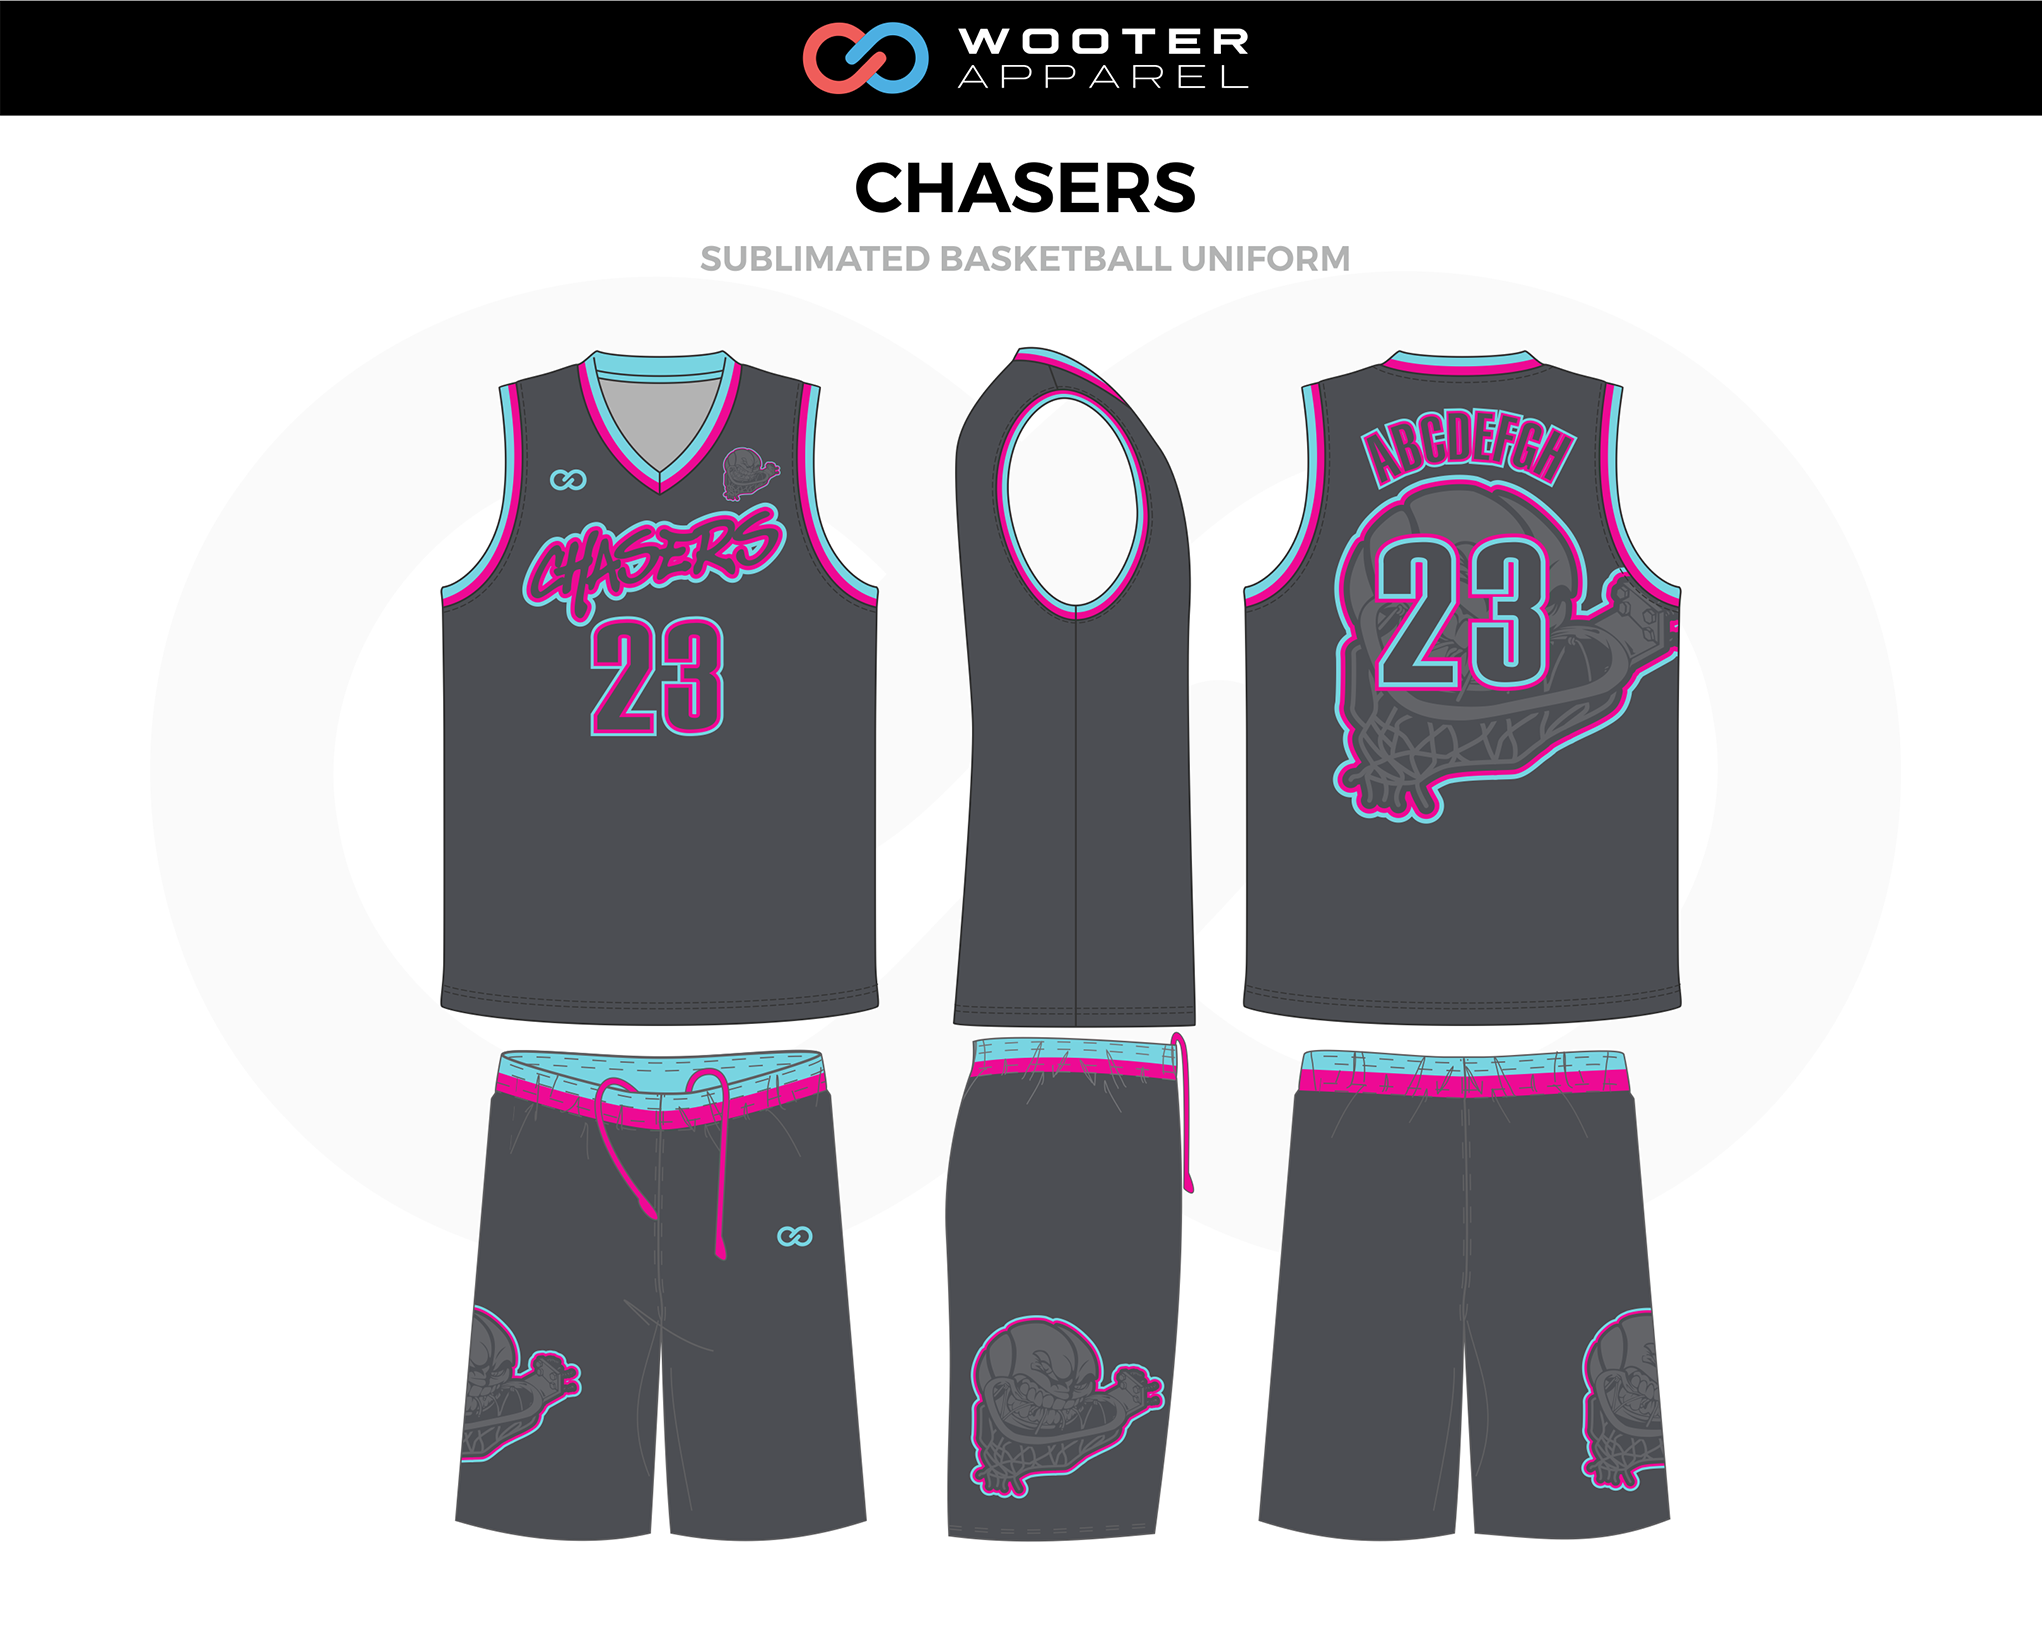 Buy Custom Basketball Uniforms Online, Wooter Apparel